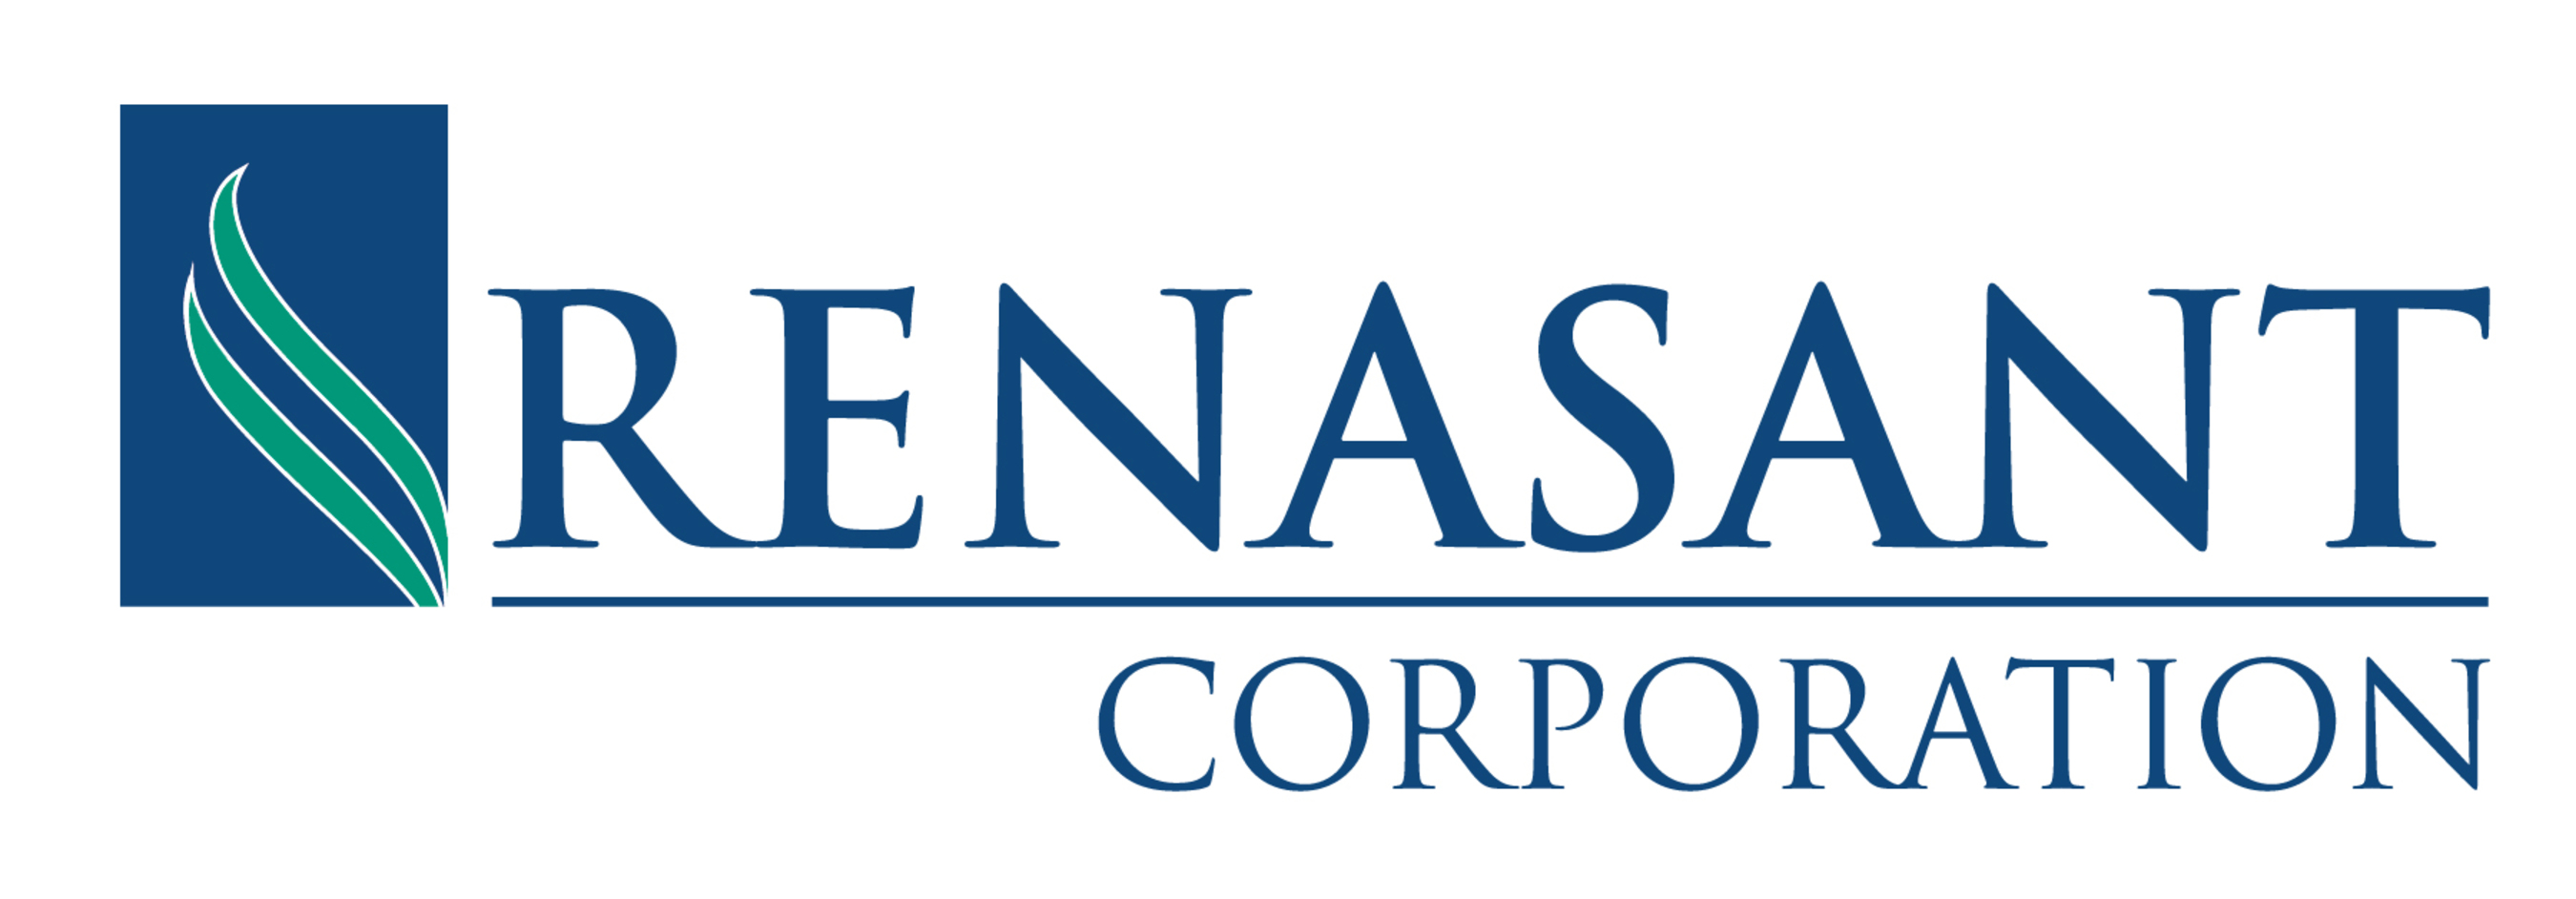 Renasant Corporation logo.